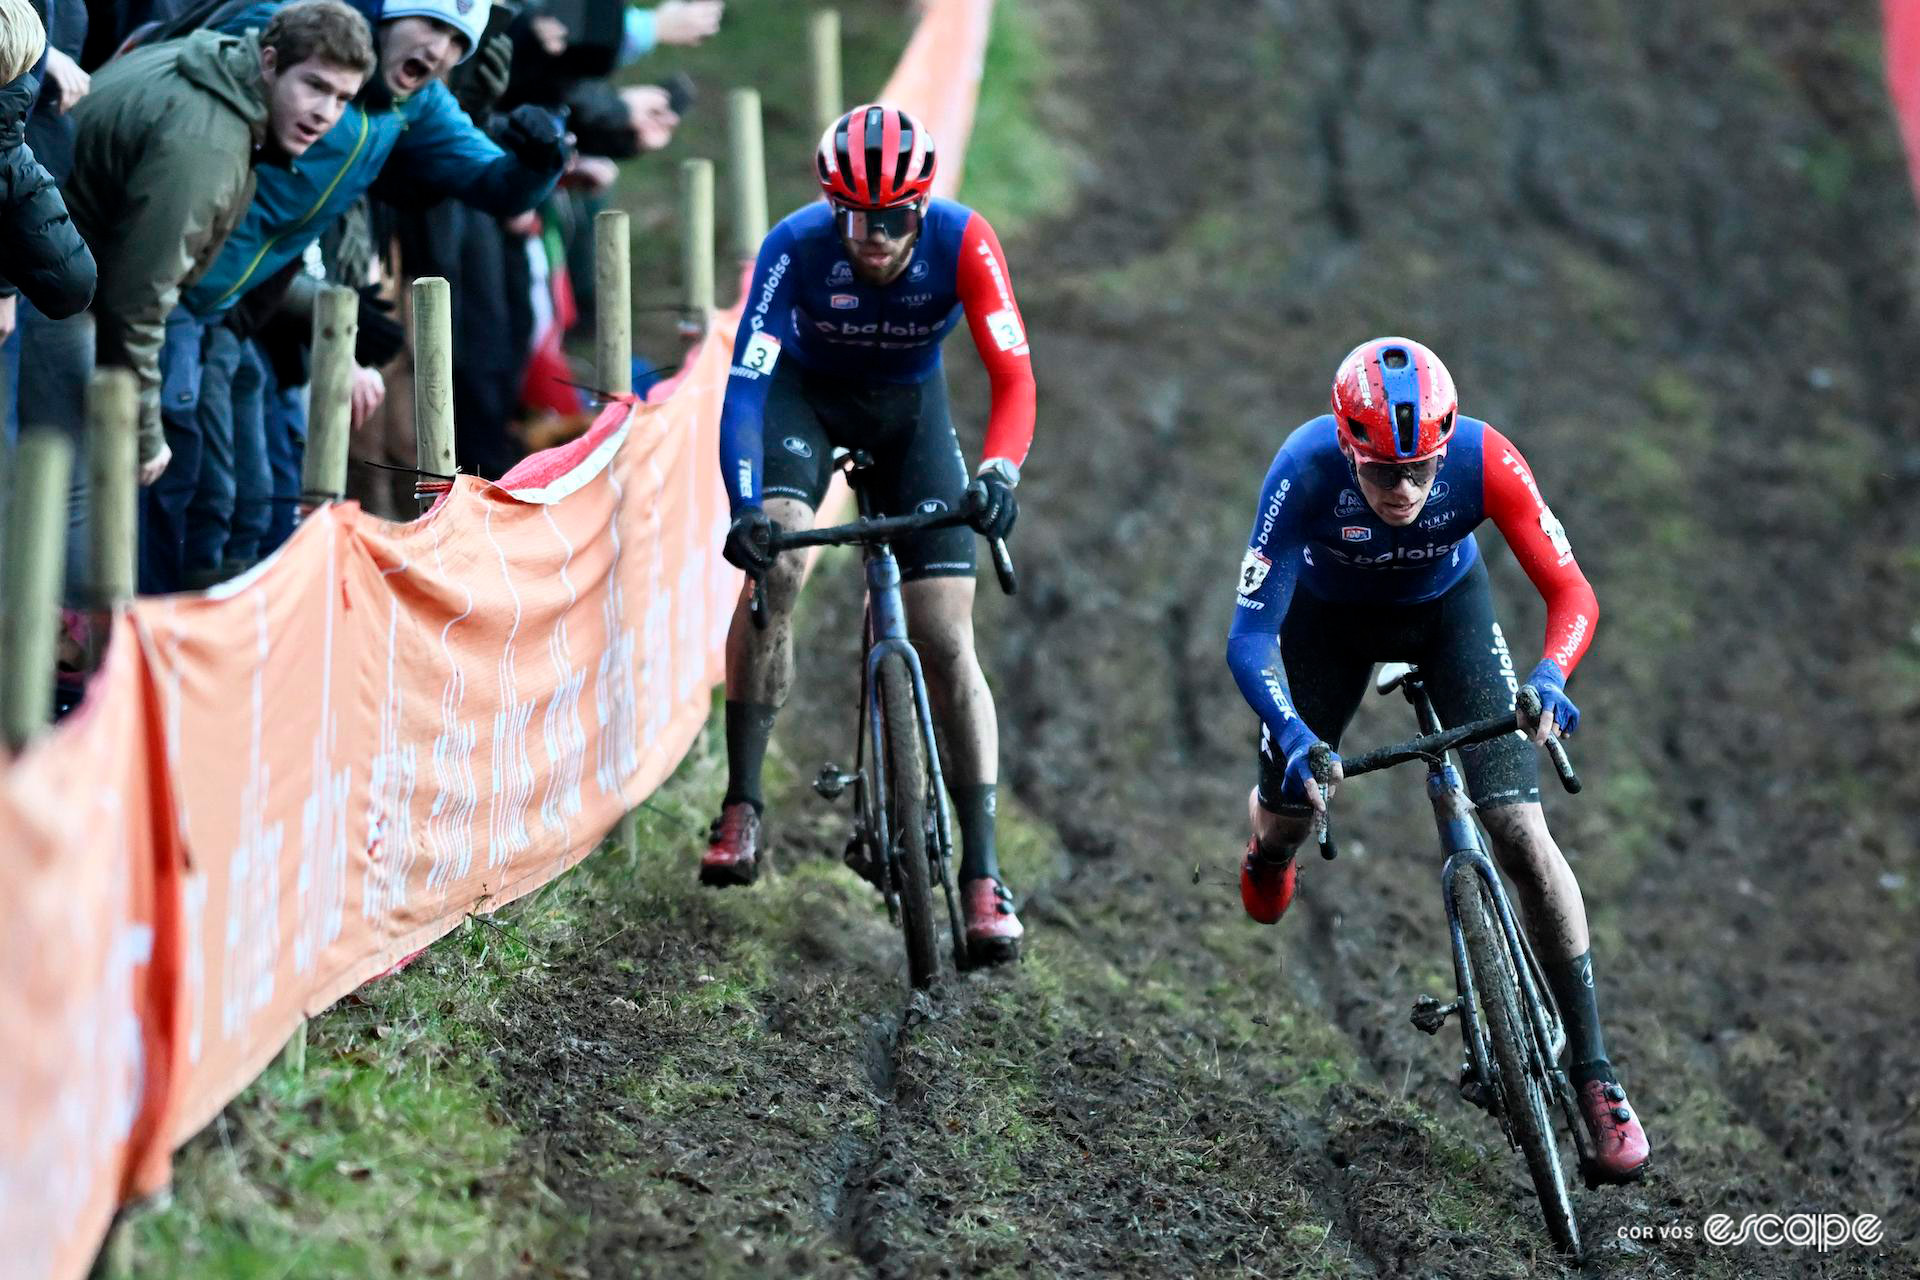 Pim Ronhaar and Joris Nieuwenhuis rid the treacherous off-camber section during Cyclocross World Cup Namur.